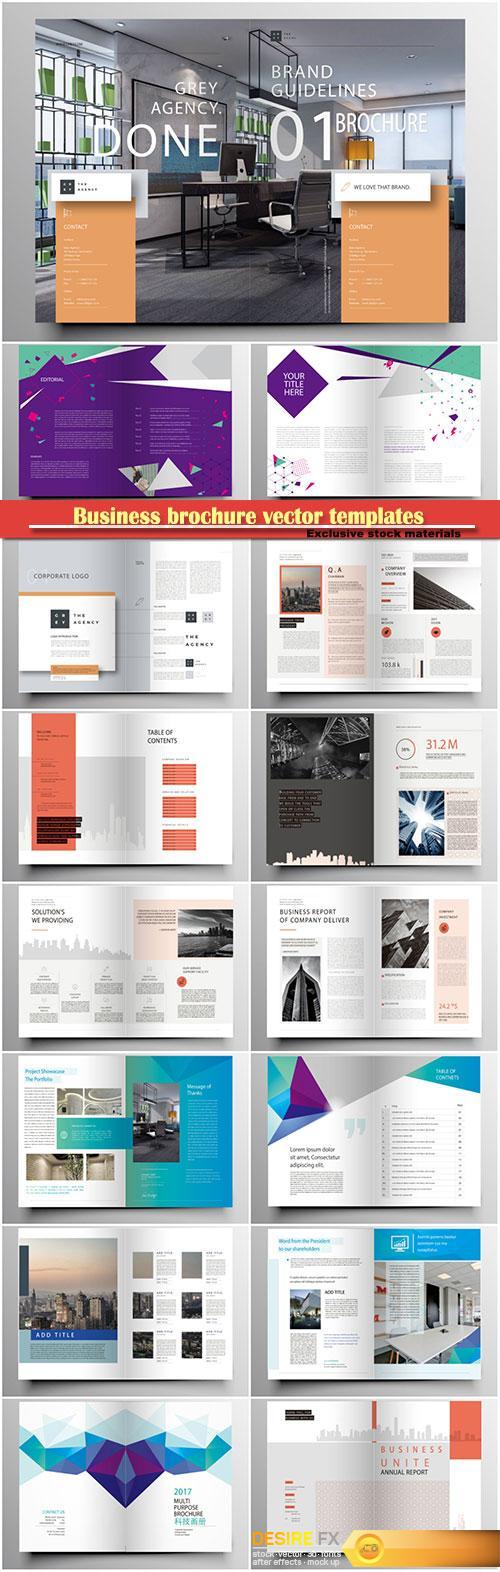 Business brochure vector templates, magazine cover, business mockup, education, presentation, report # 63